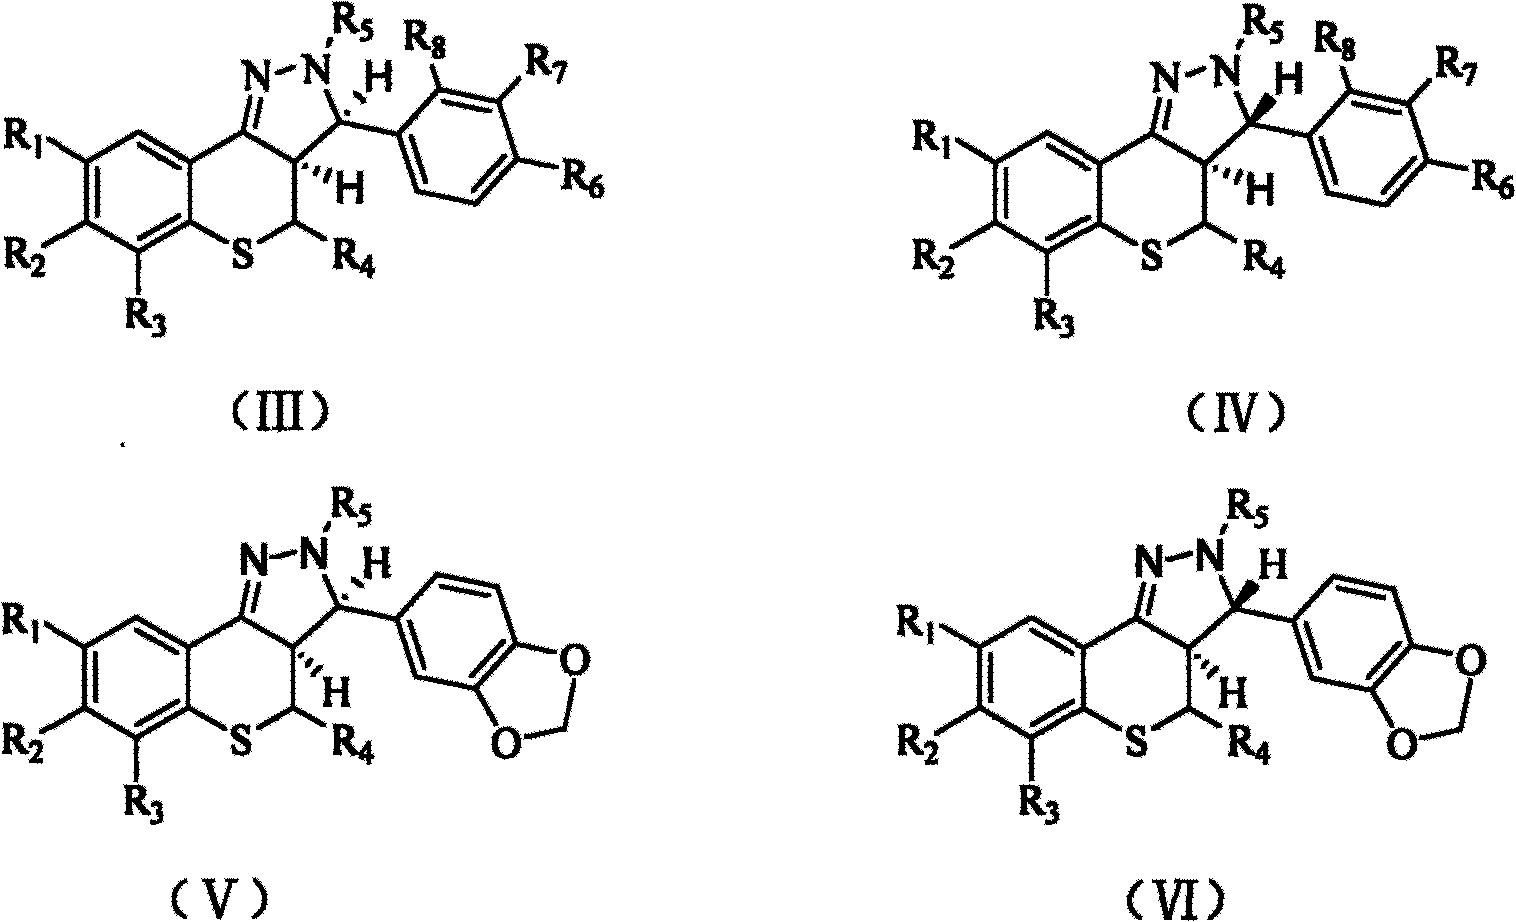 Novel 2,3,3a,4-tetrahydro thiochromeno [4,3-c] pyrazole antiinflammatory antimycotic compound